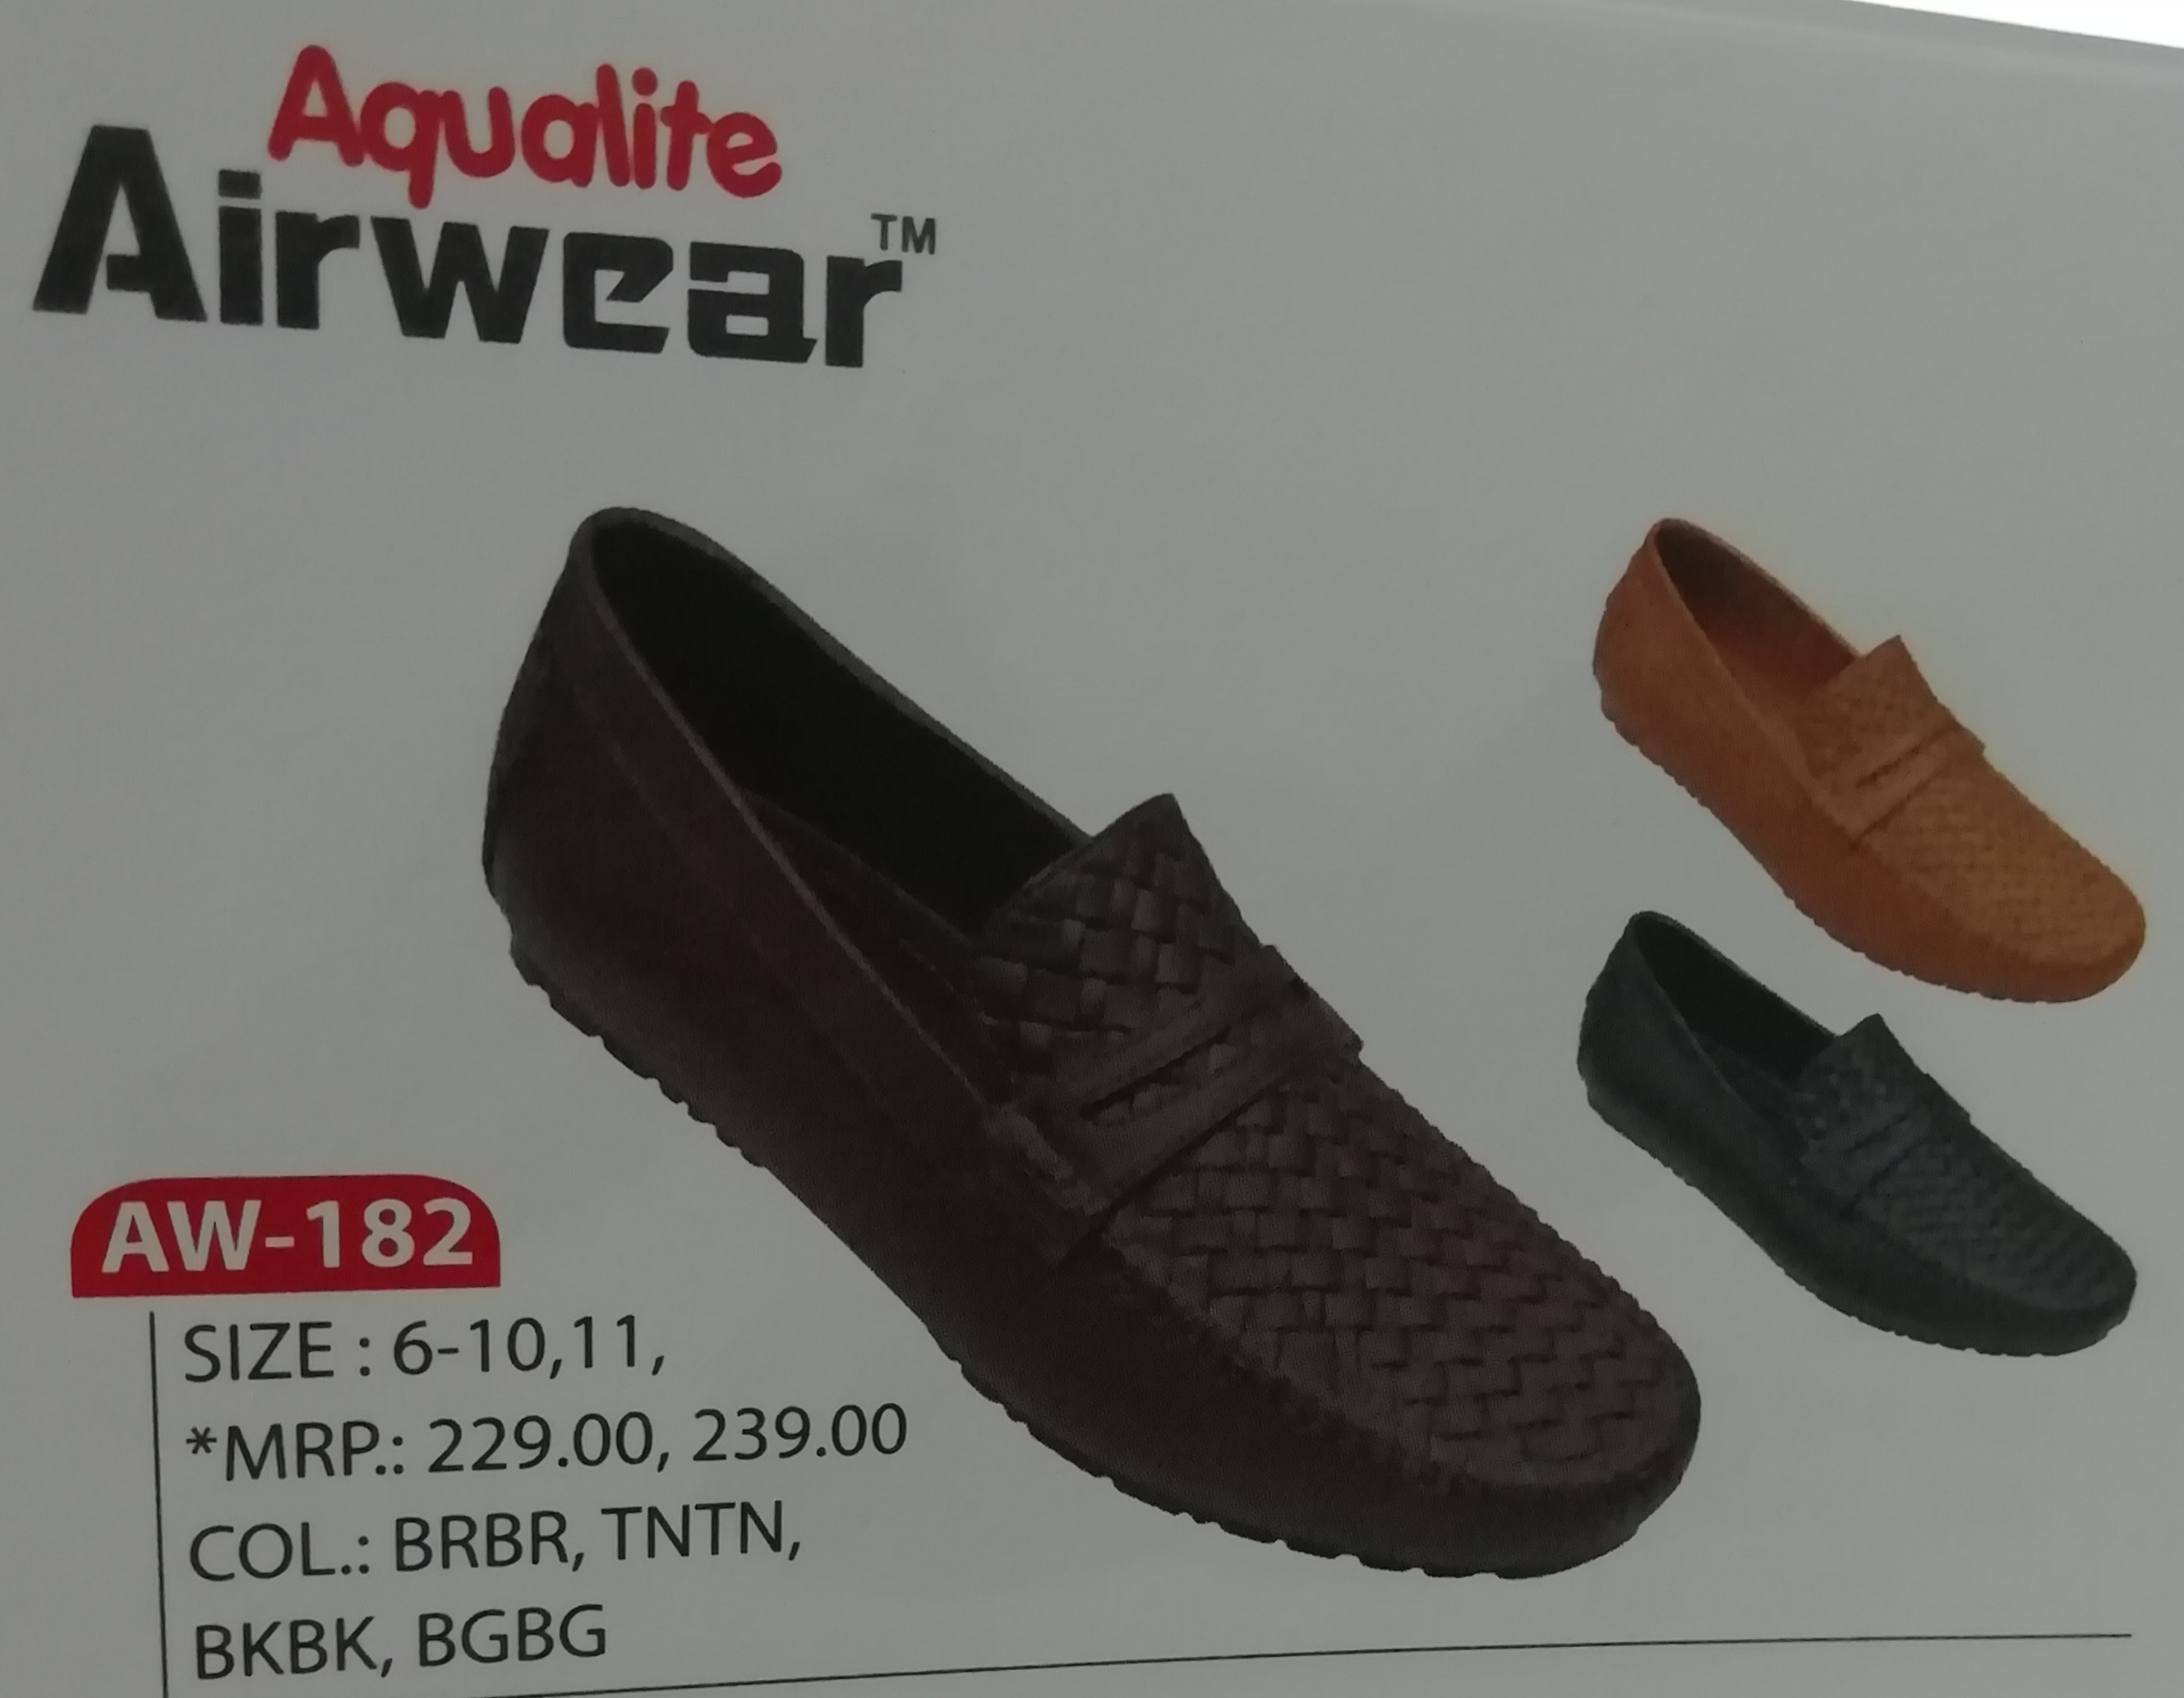 aqualite airwear